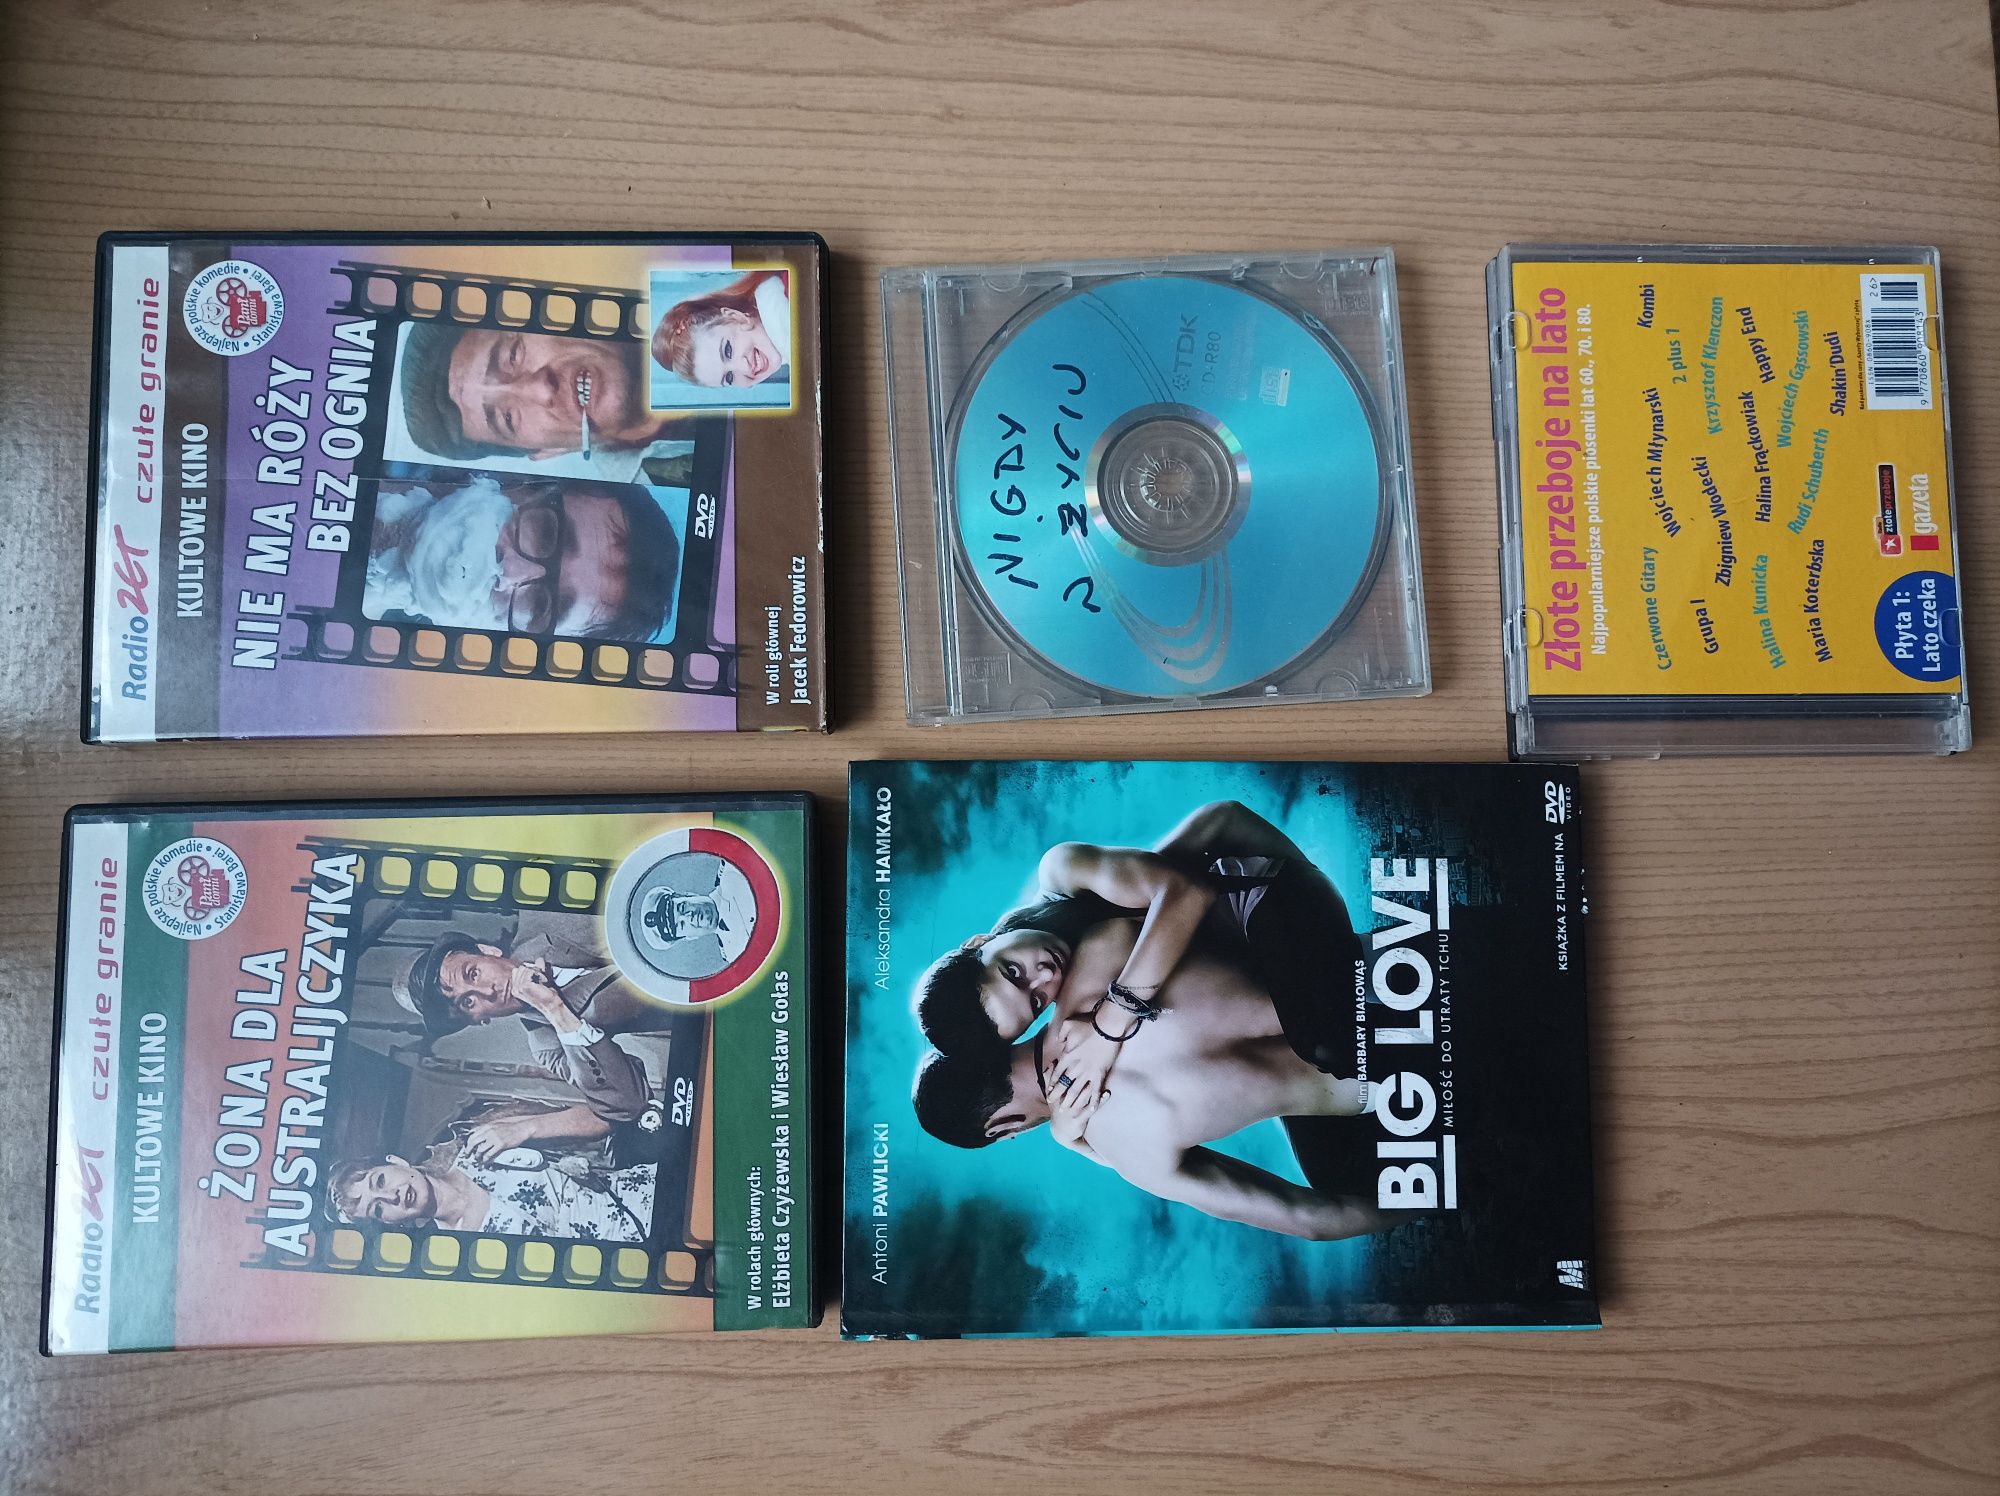 Filmy dvd i gratis Polskie filmy na DVD. Piosenki płyta gratis